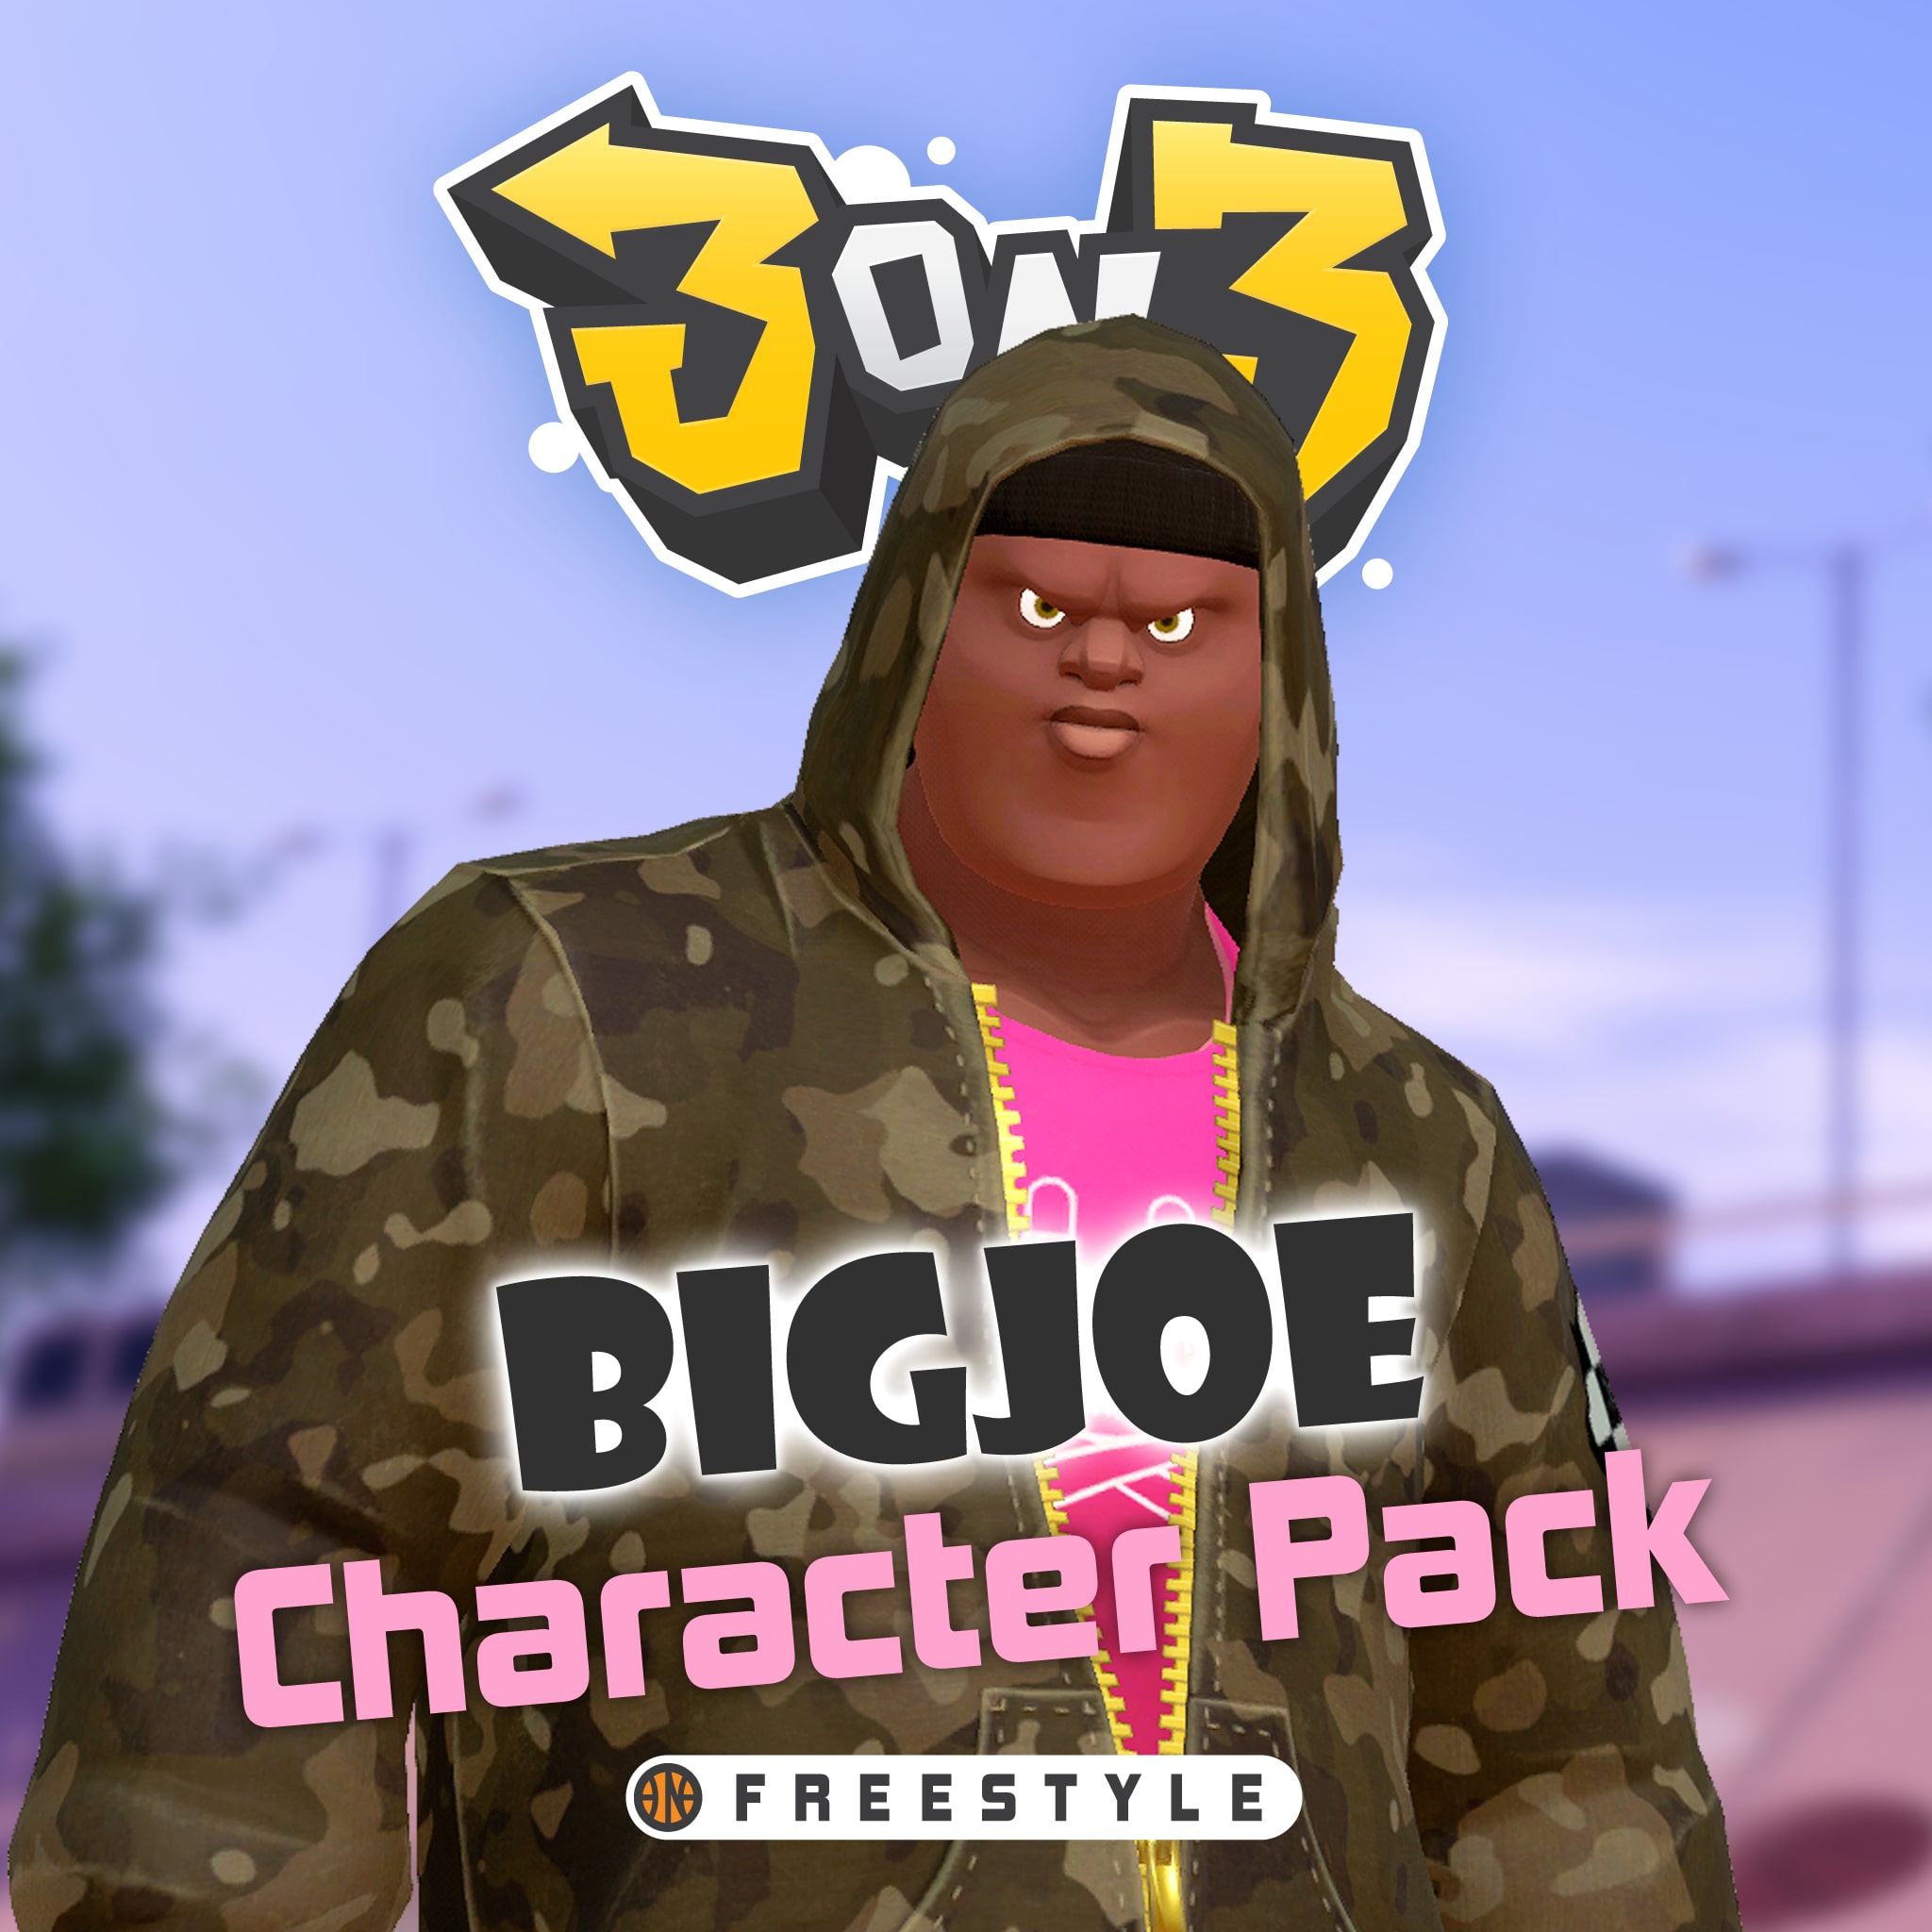 3on3 FreeStyle - Paquete de personaje de Big Joe